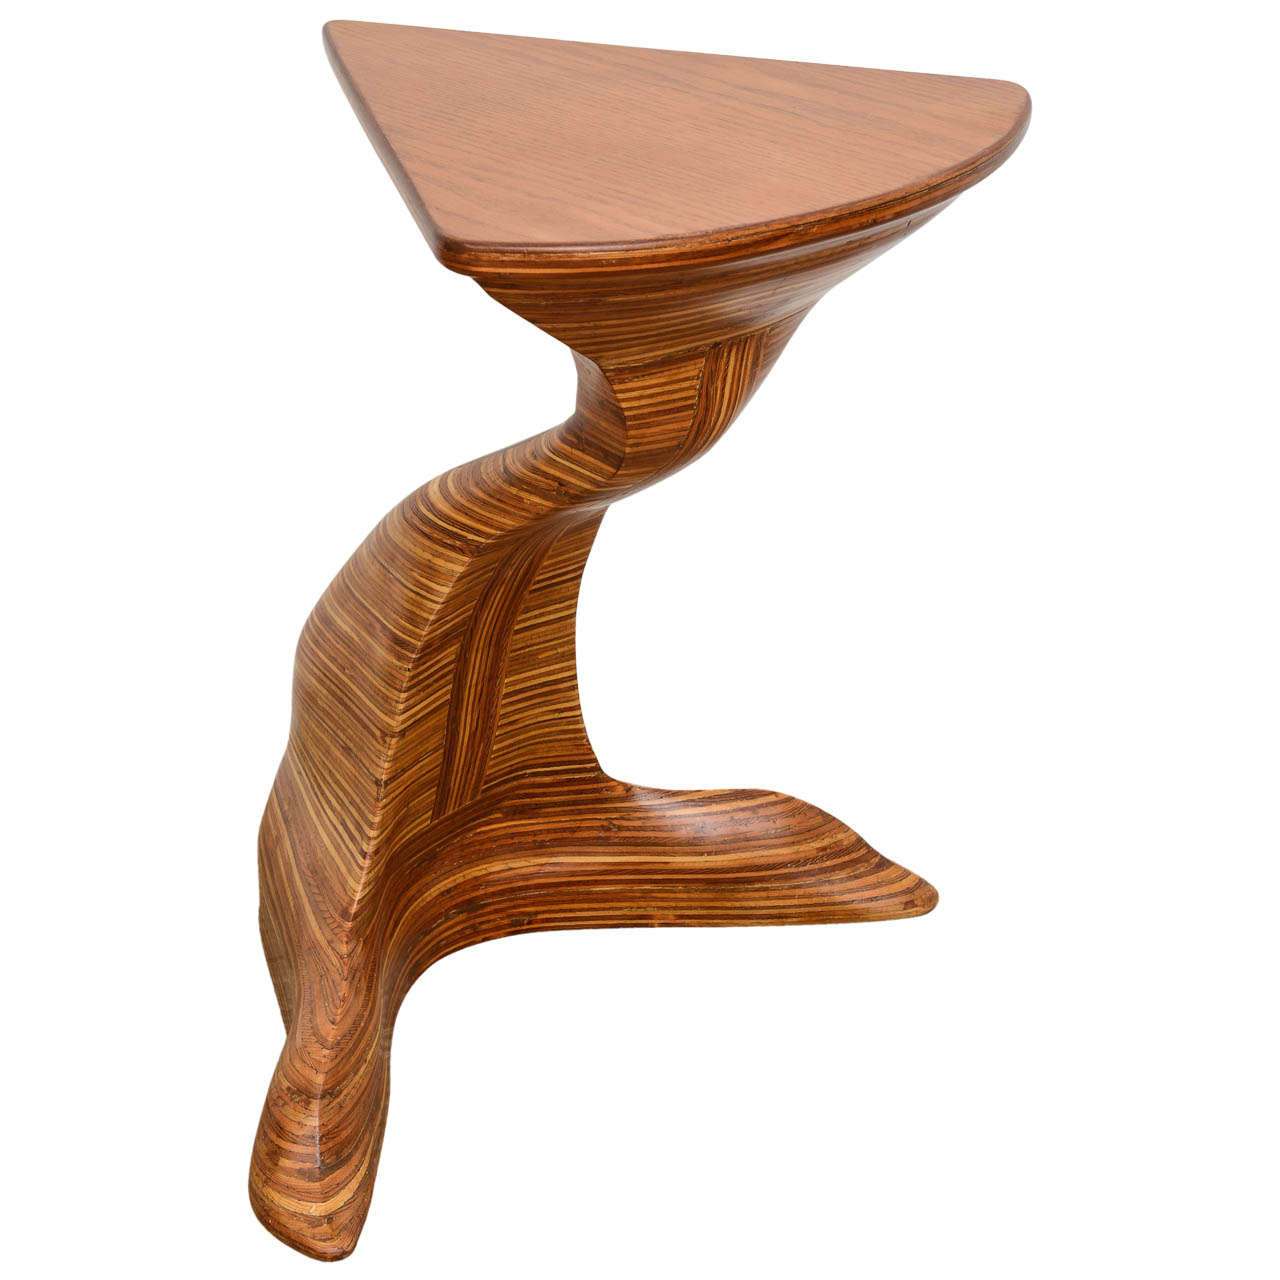 Sculptural Layered Wood Pedestal Boomerang Table